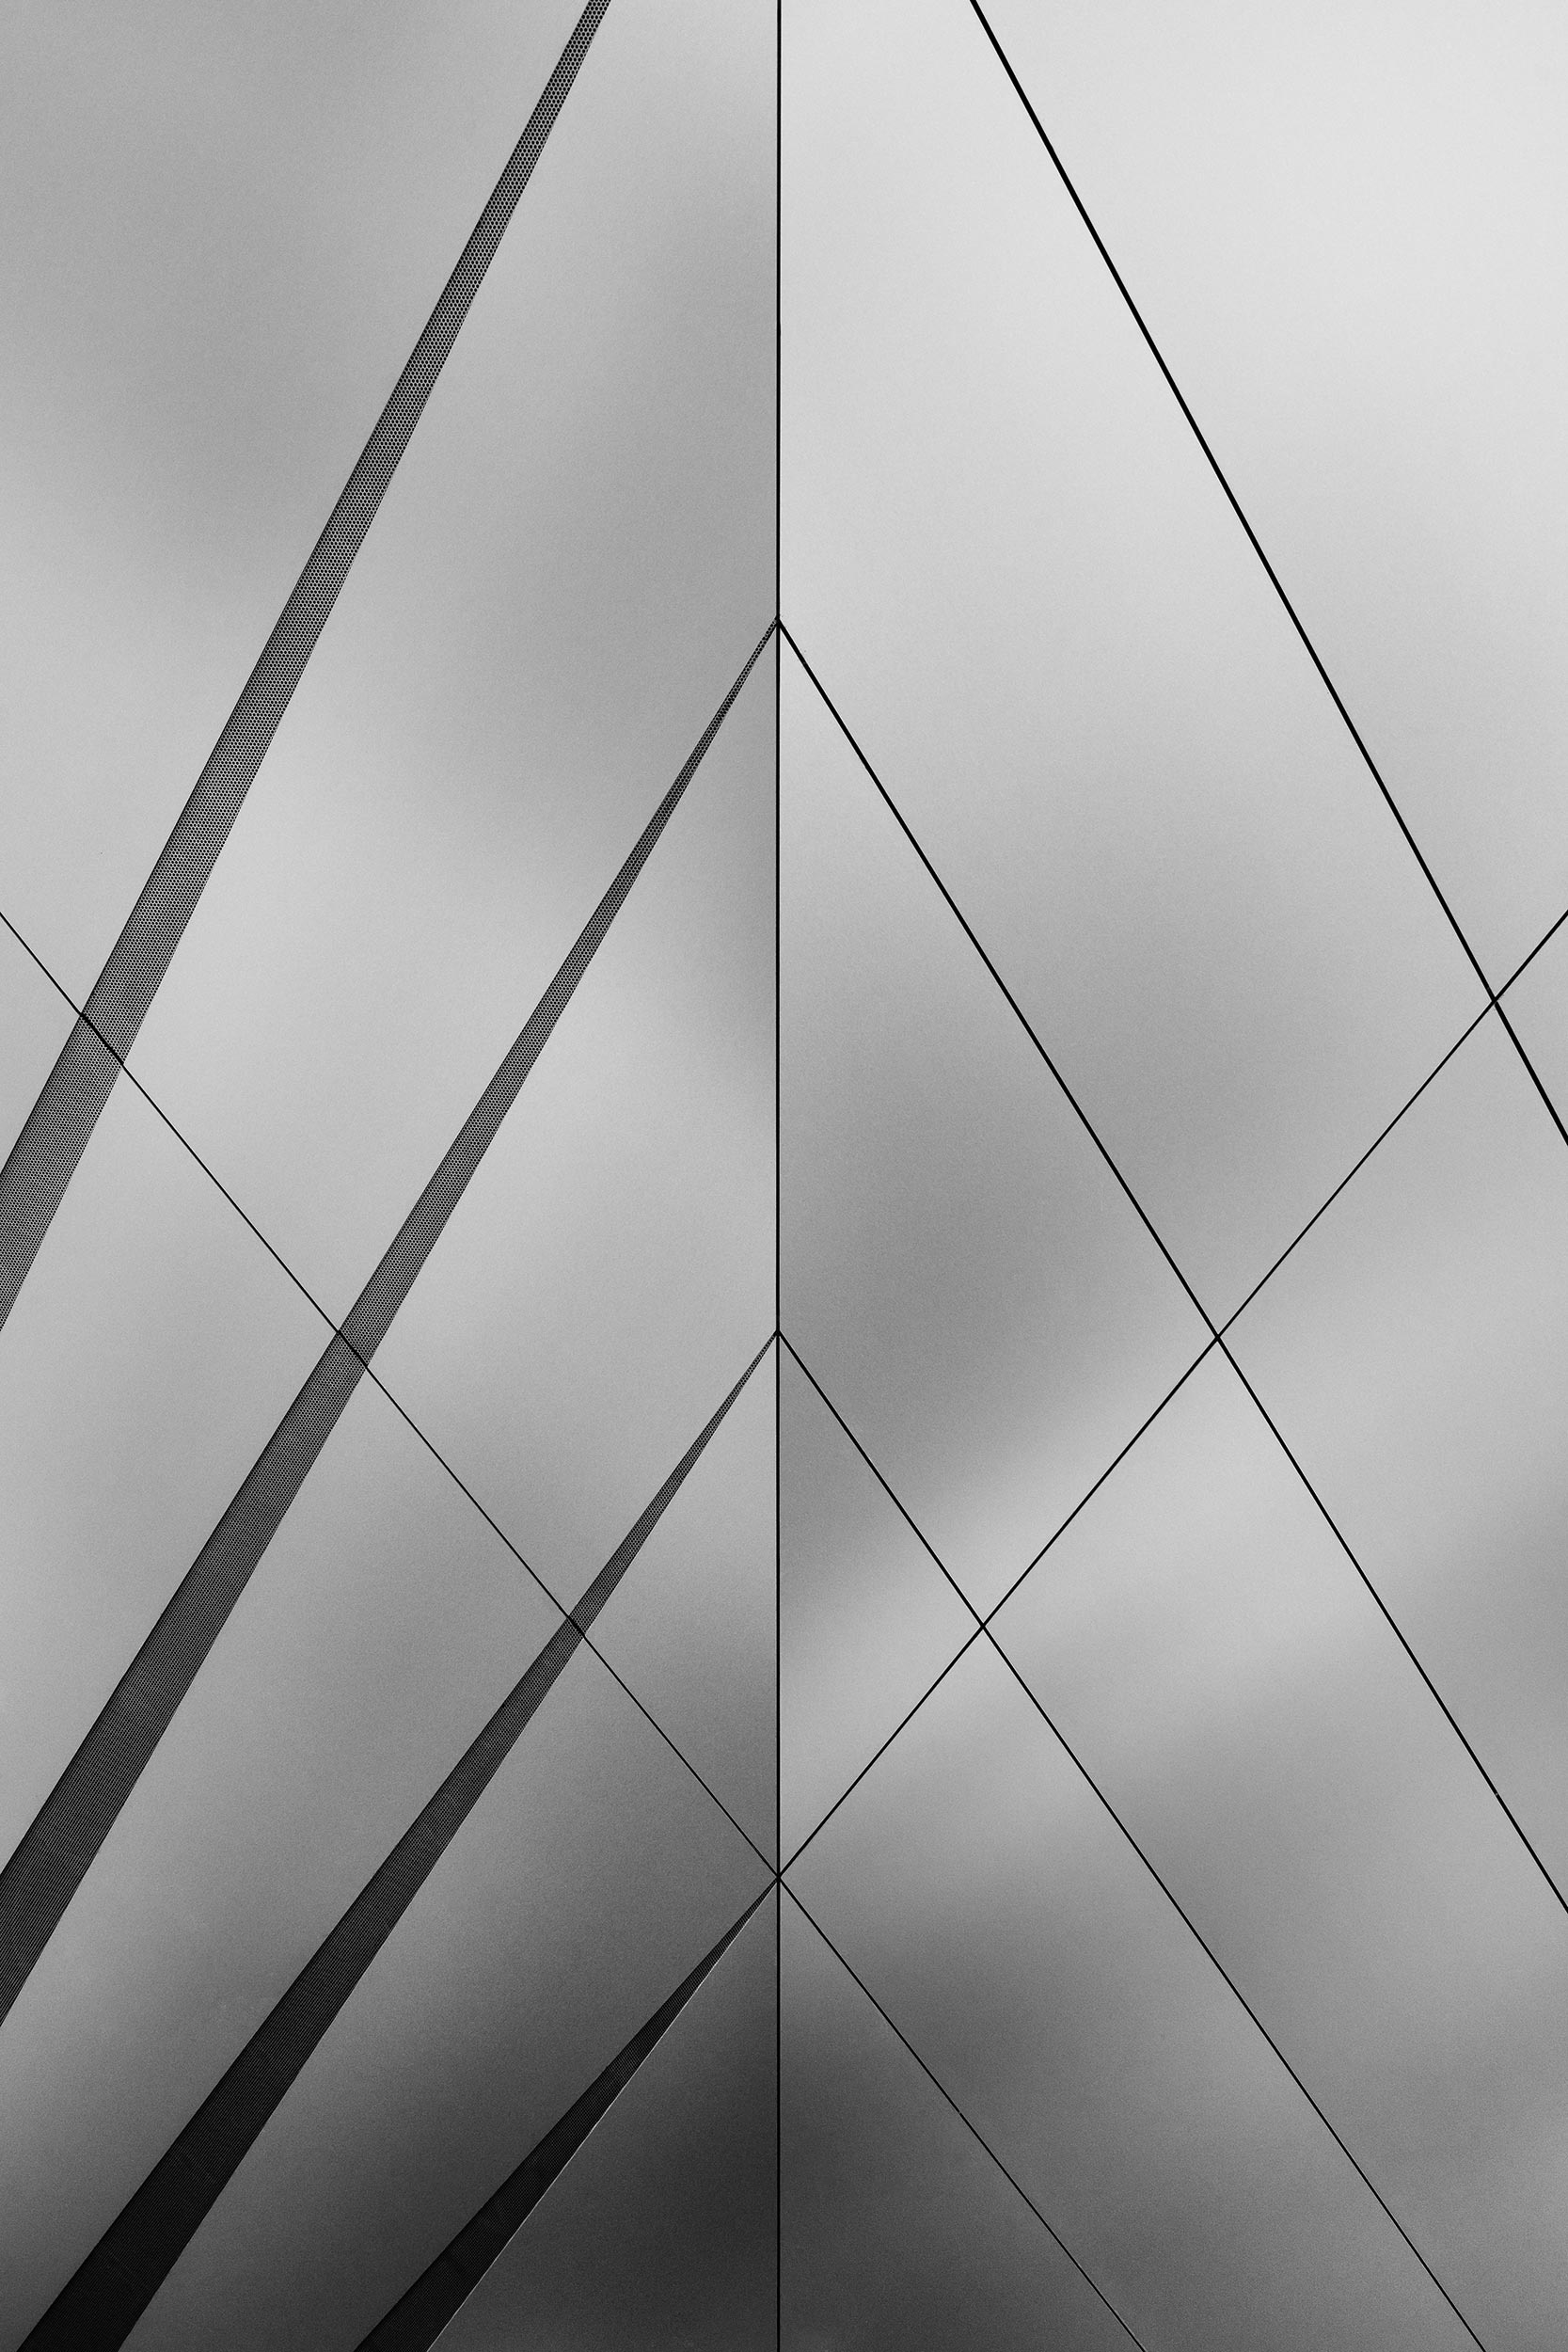 PEMA II, Innsbruck, Architecture Photography, Black & White